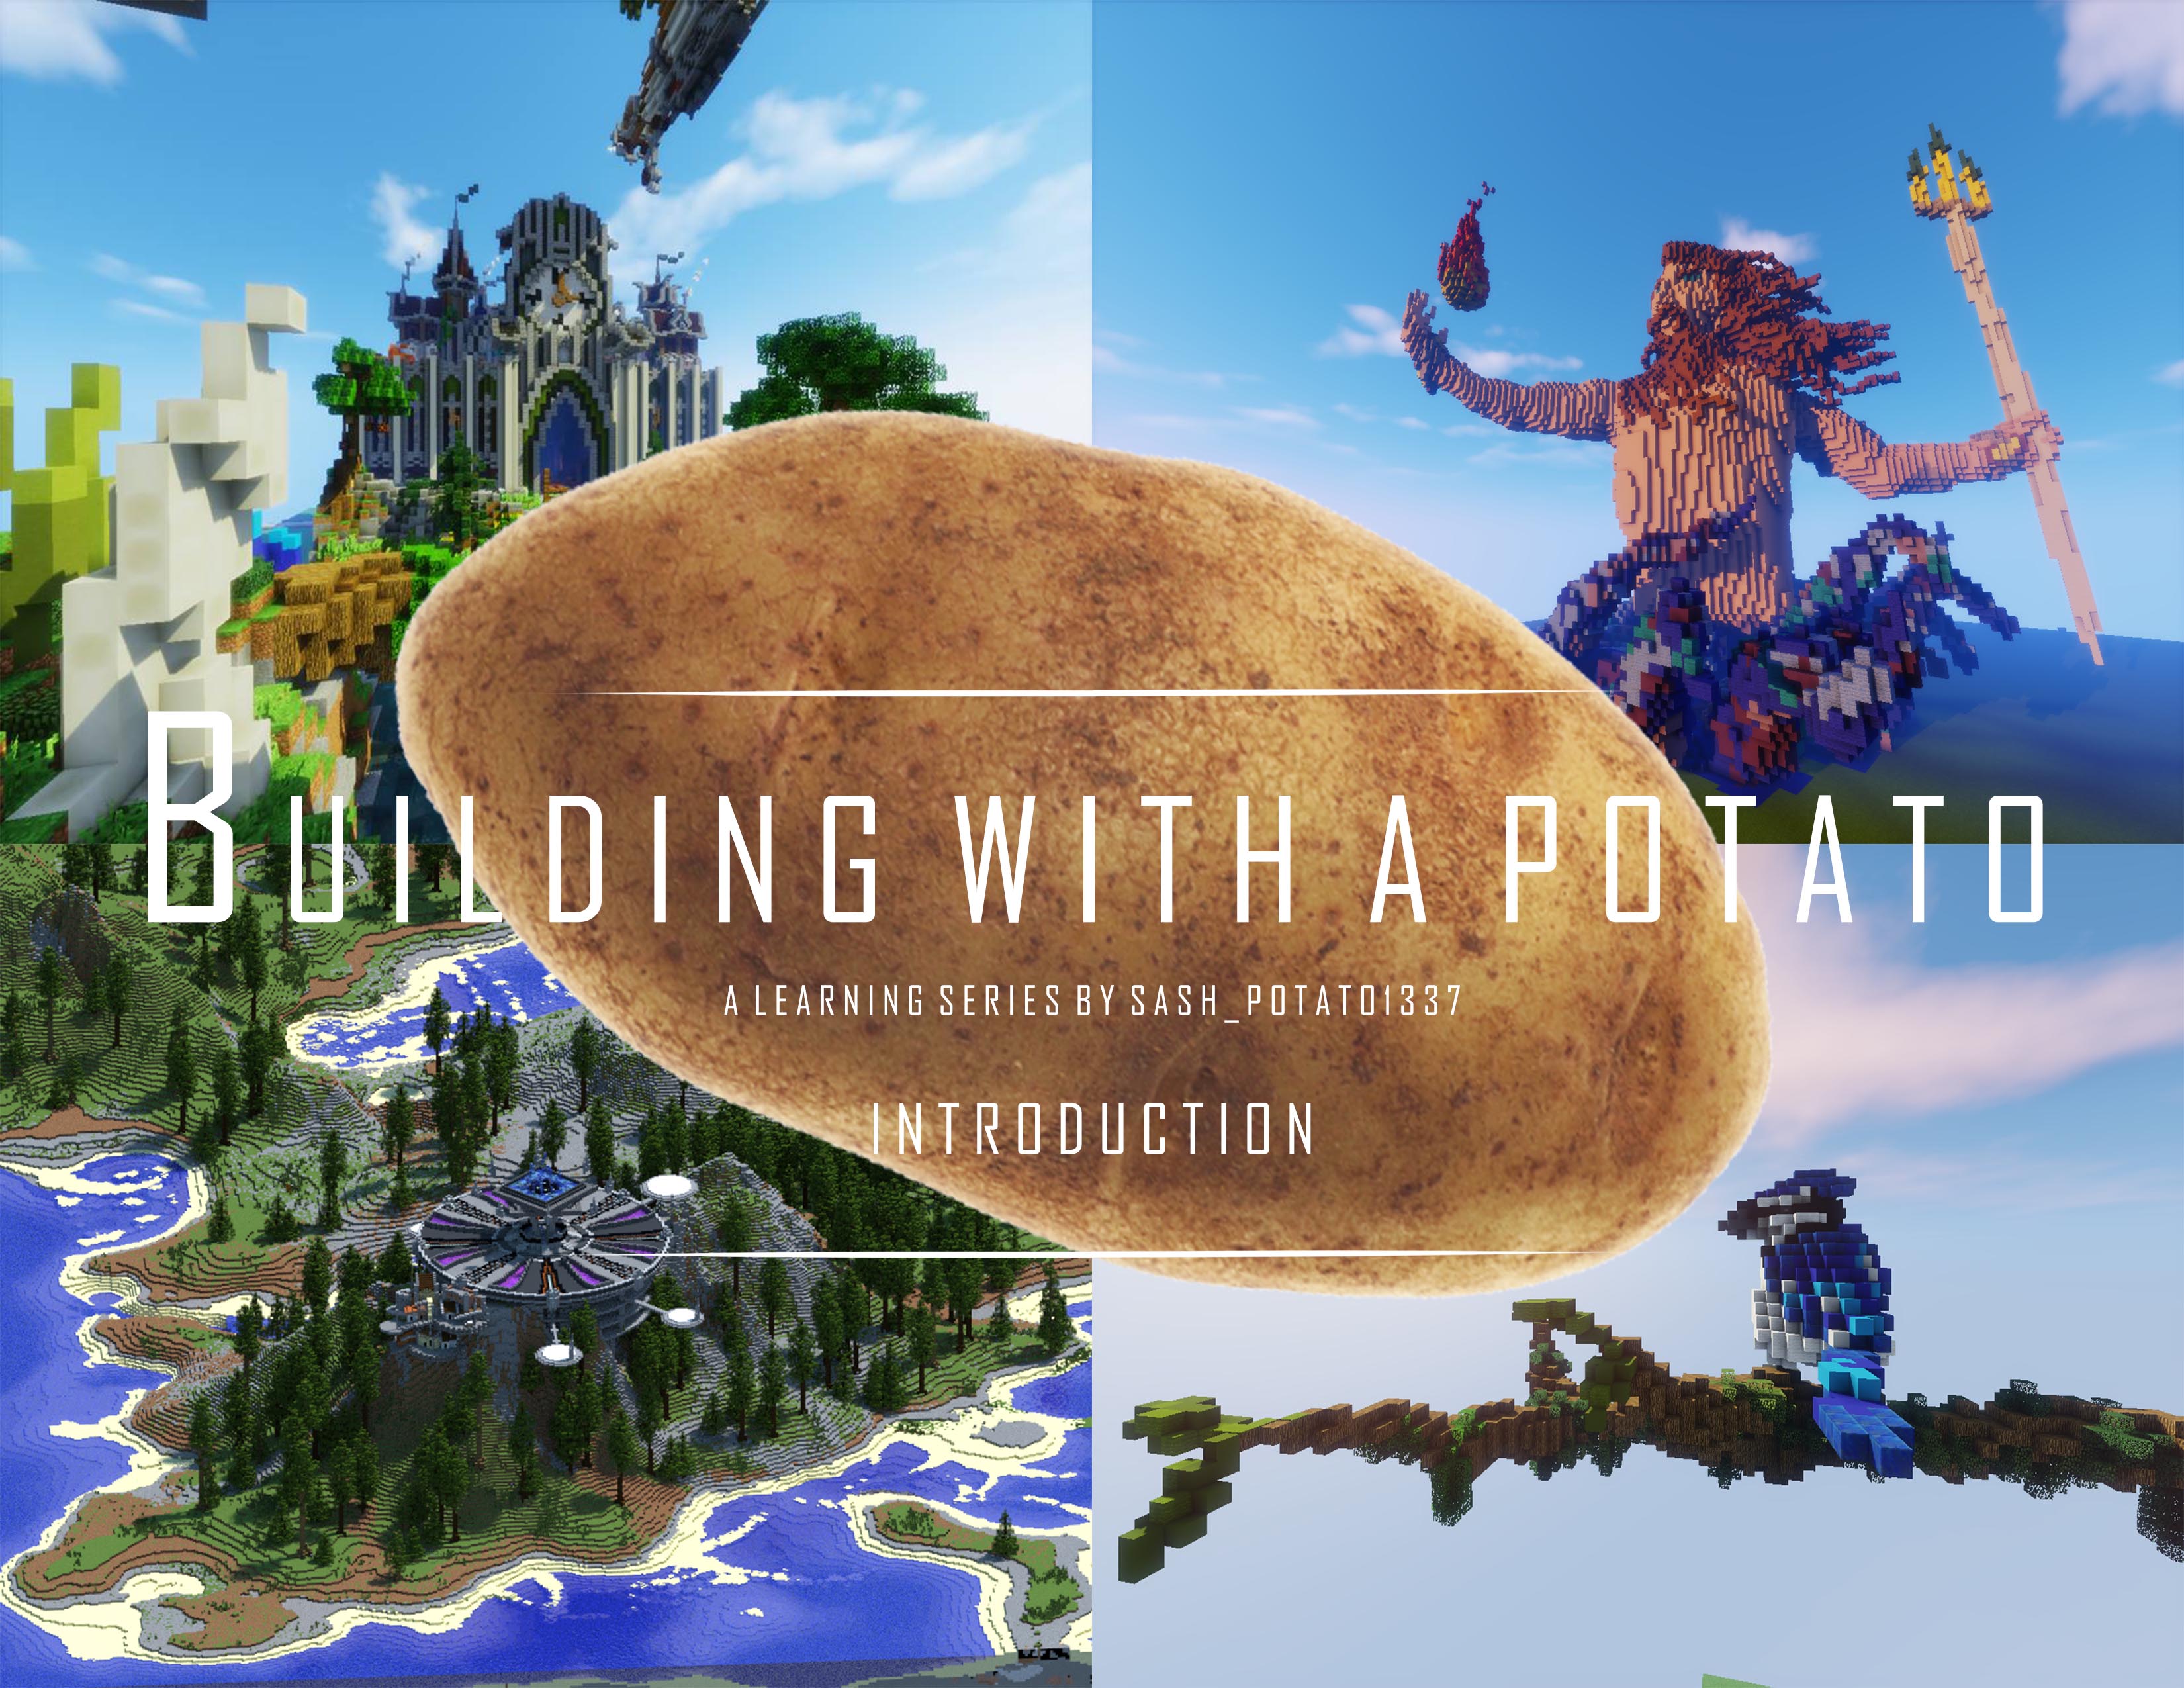 Building with a potato.jpg